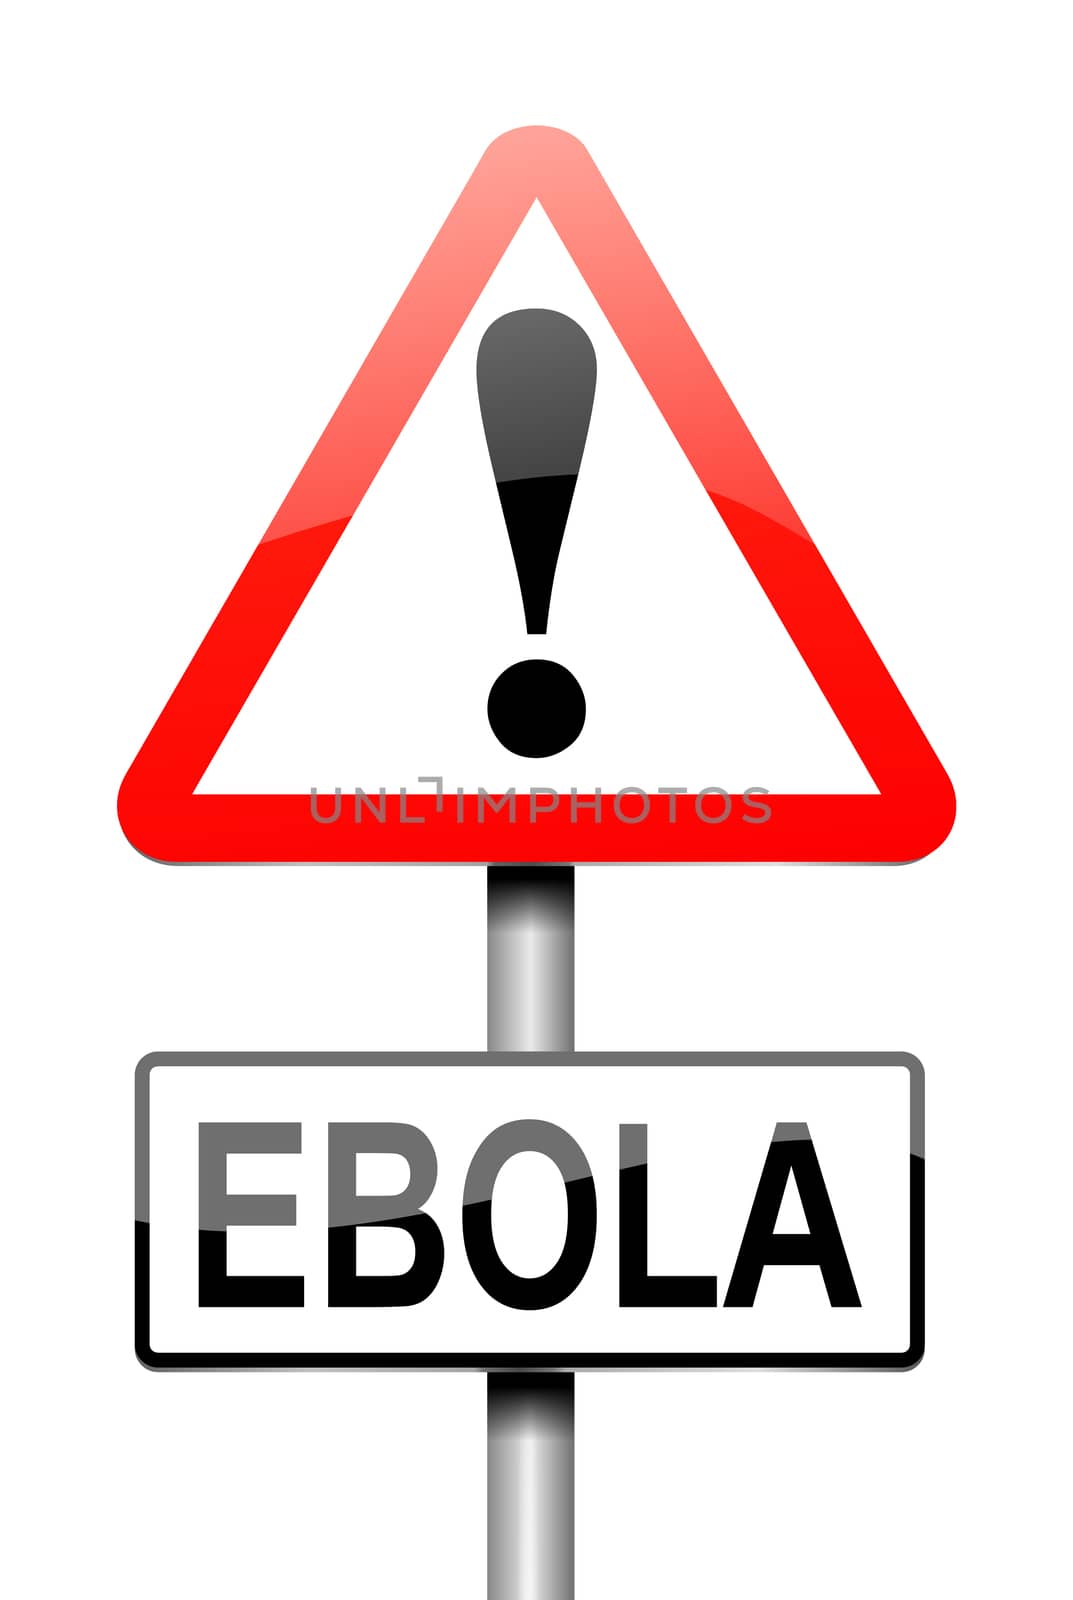 Ebola concept. by 72soul